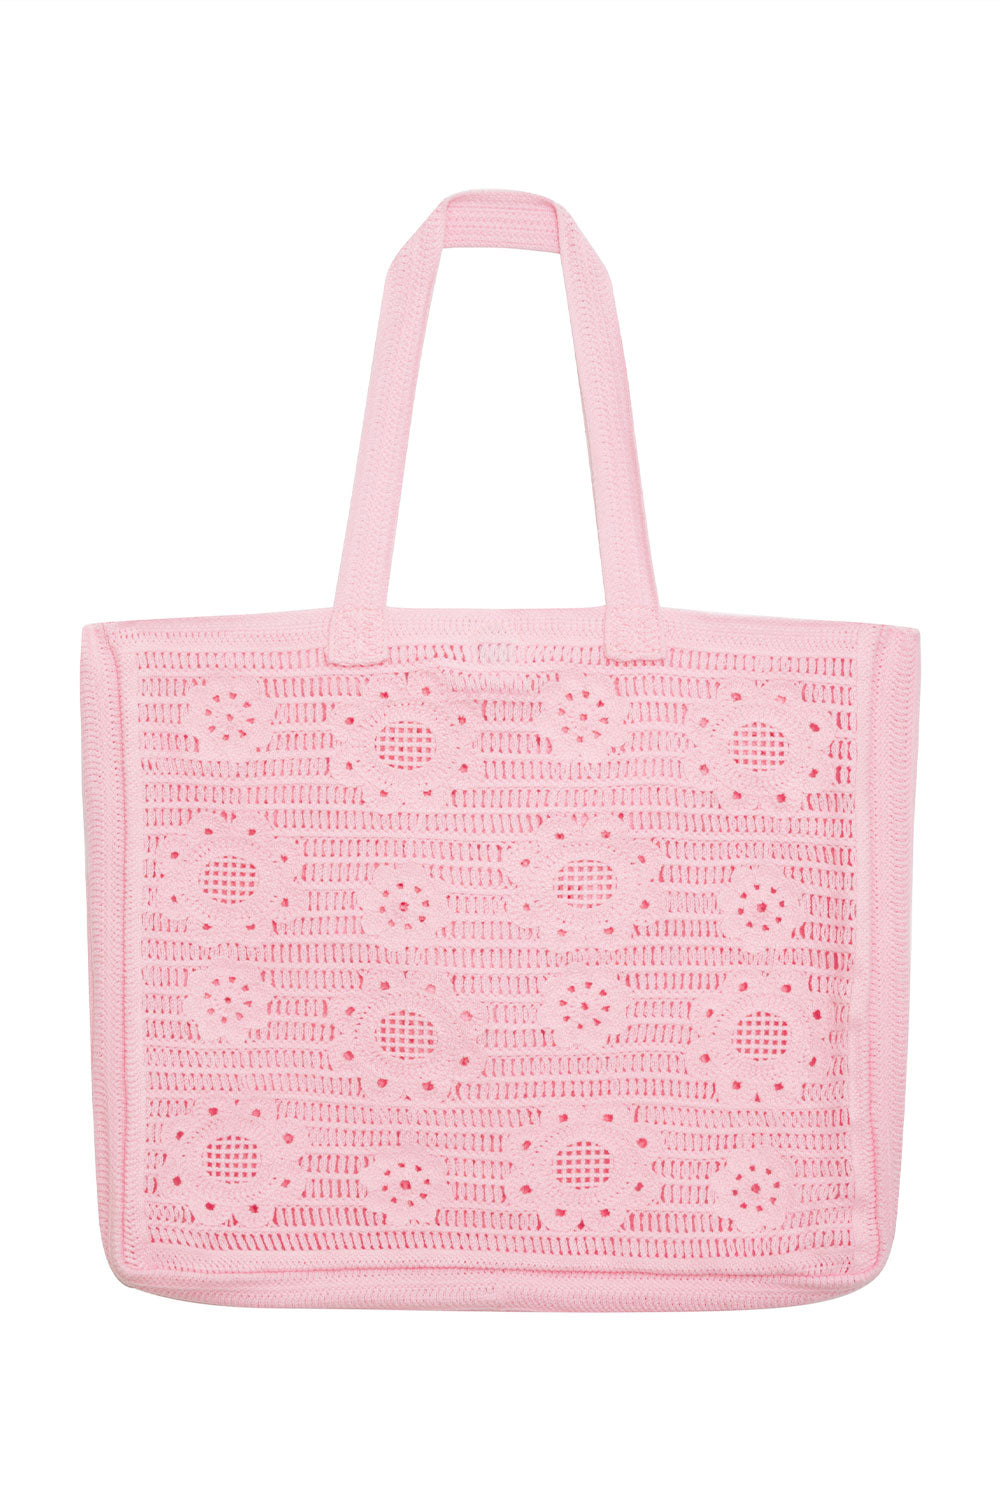 x PAMELA ANDERSON Lola Crochet Tote Bag - Pink Dream